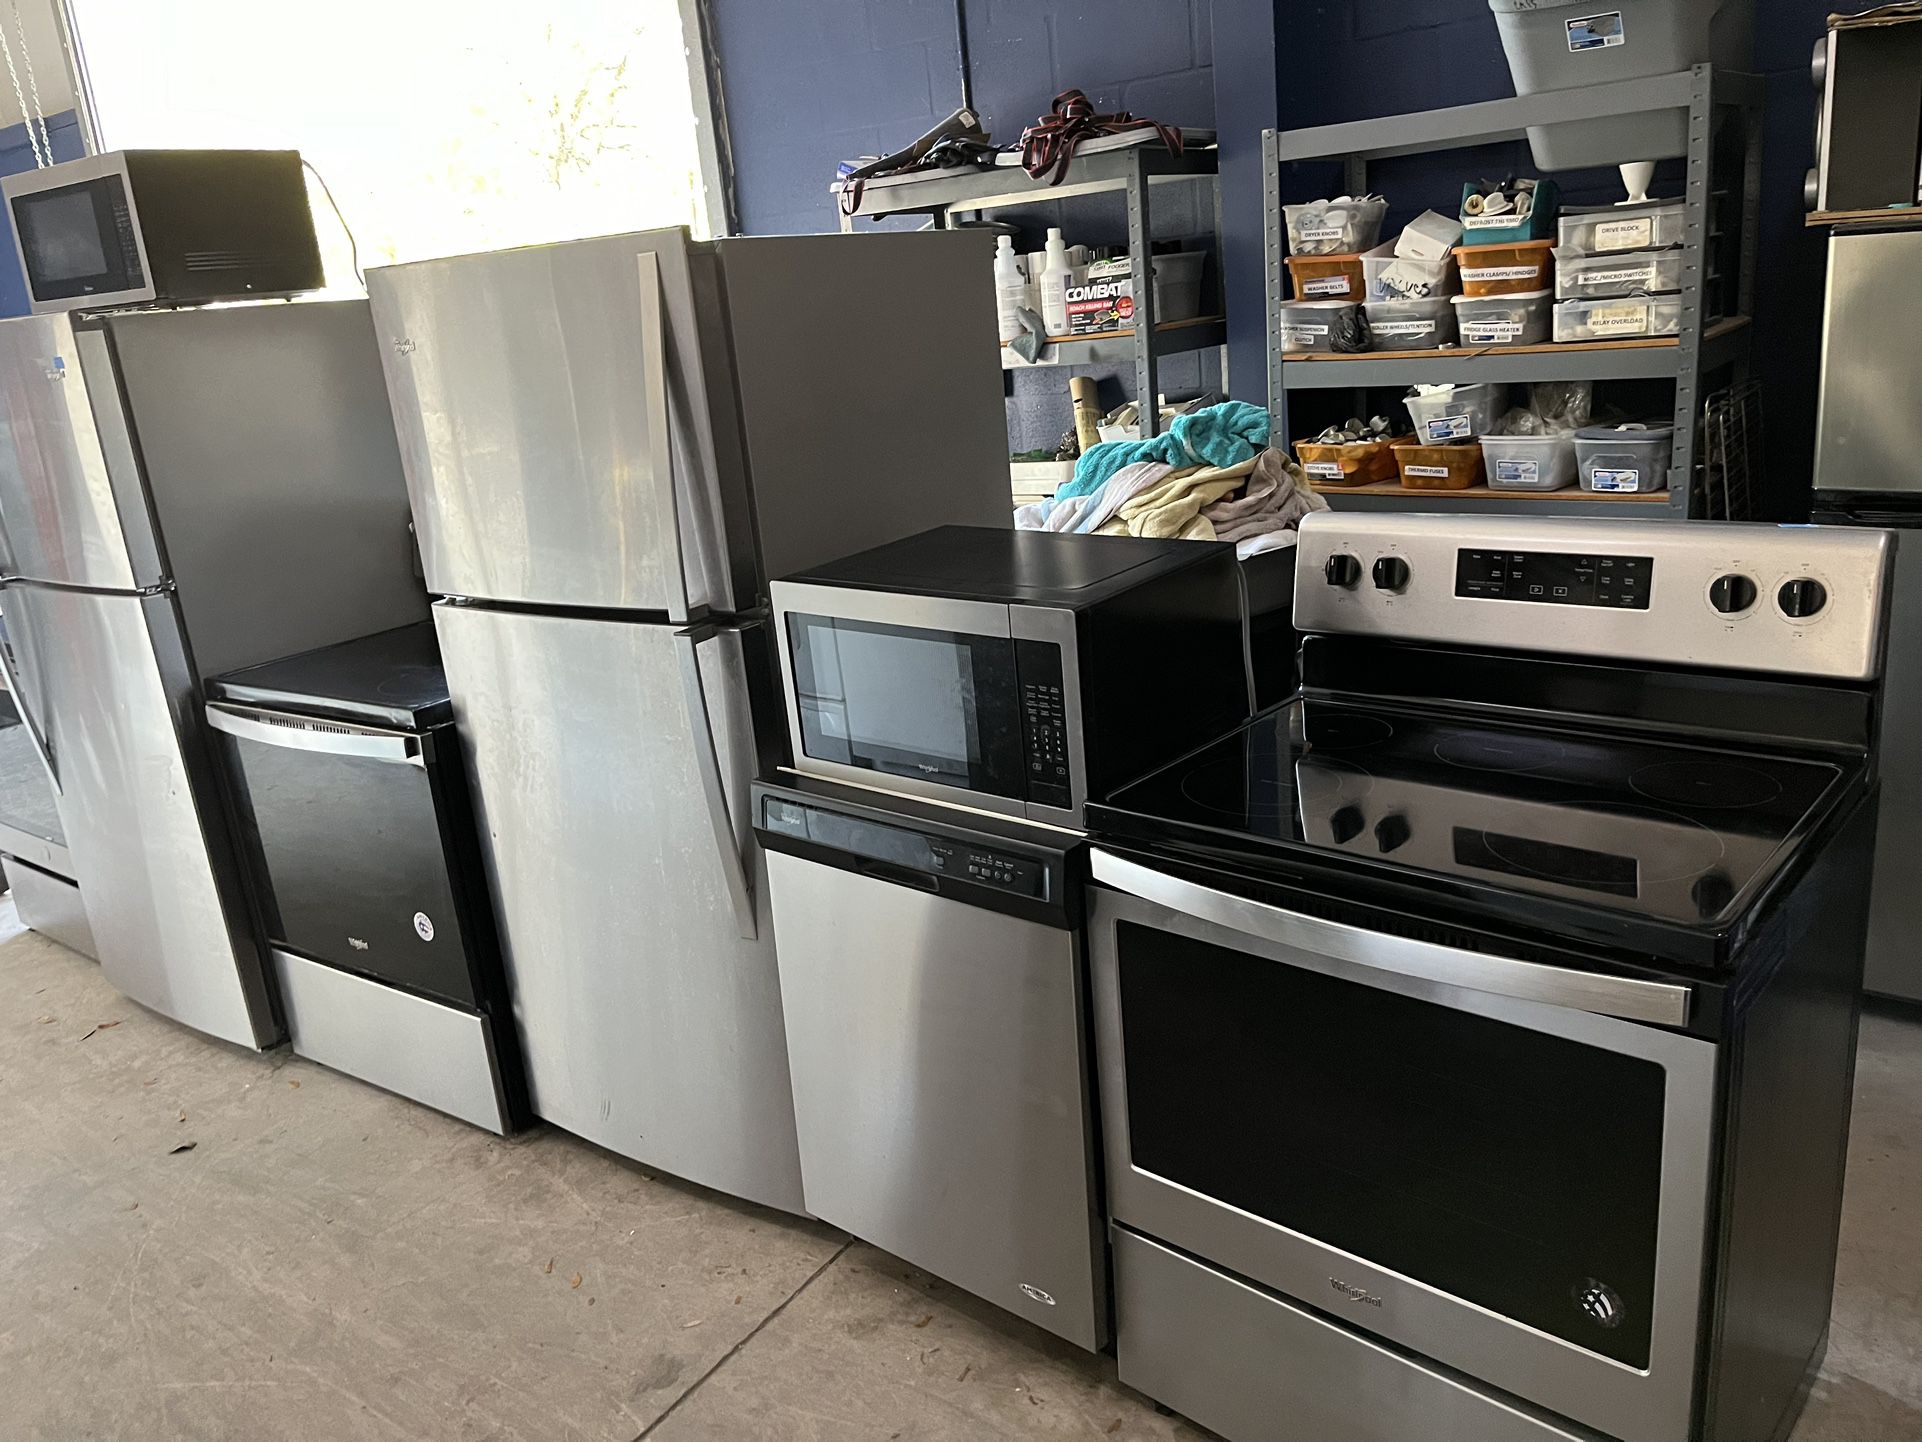 Stainless Steel Kitchen Appliance Set 